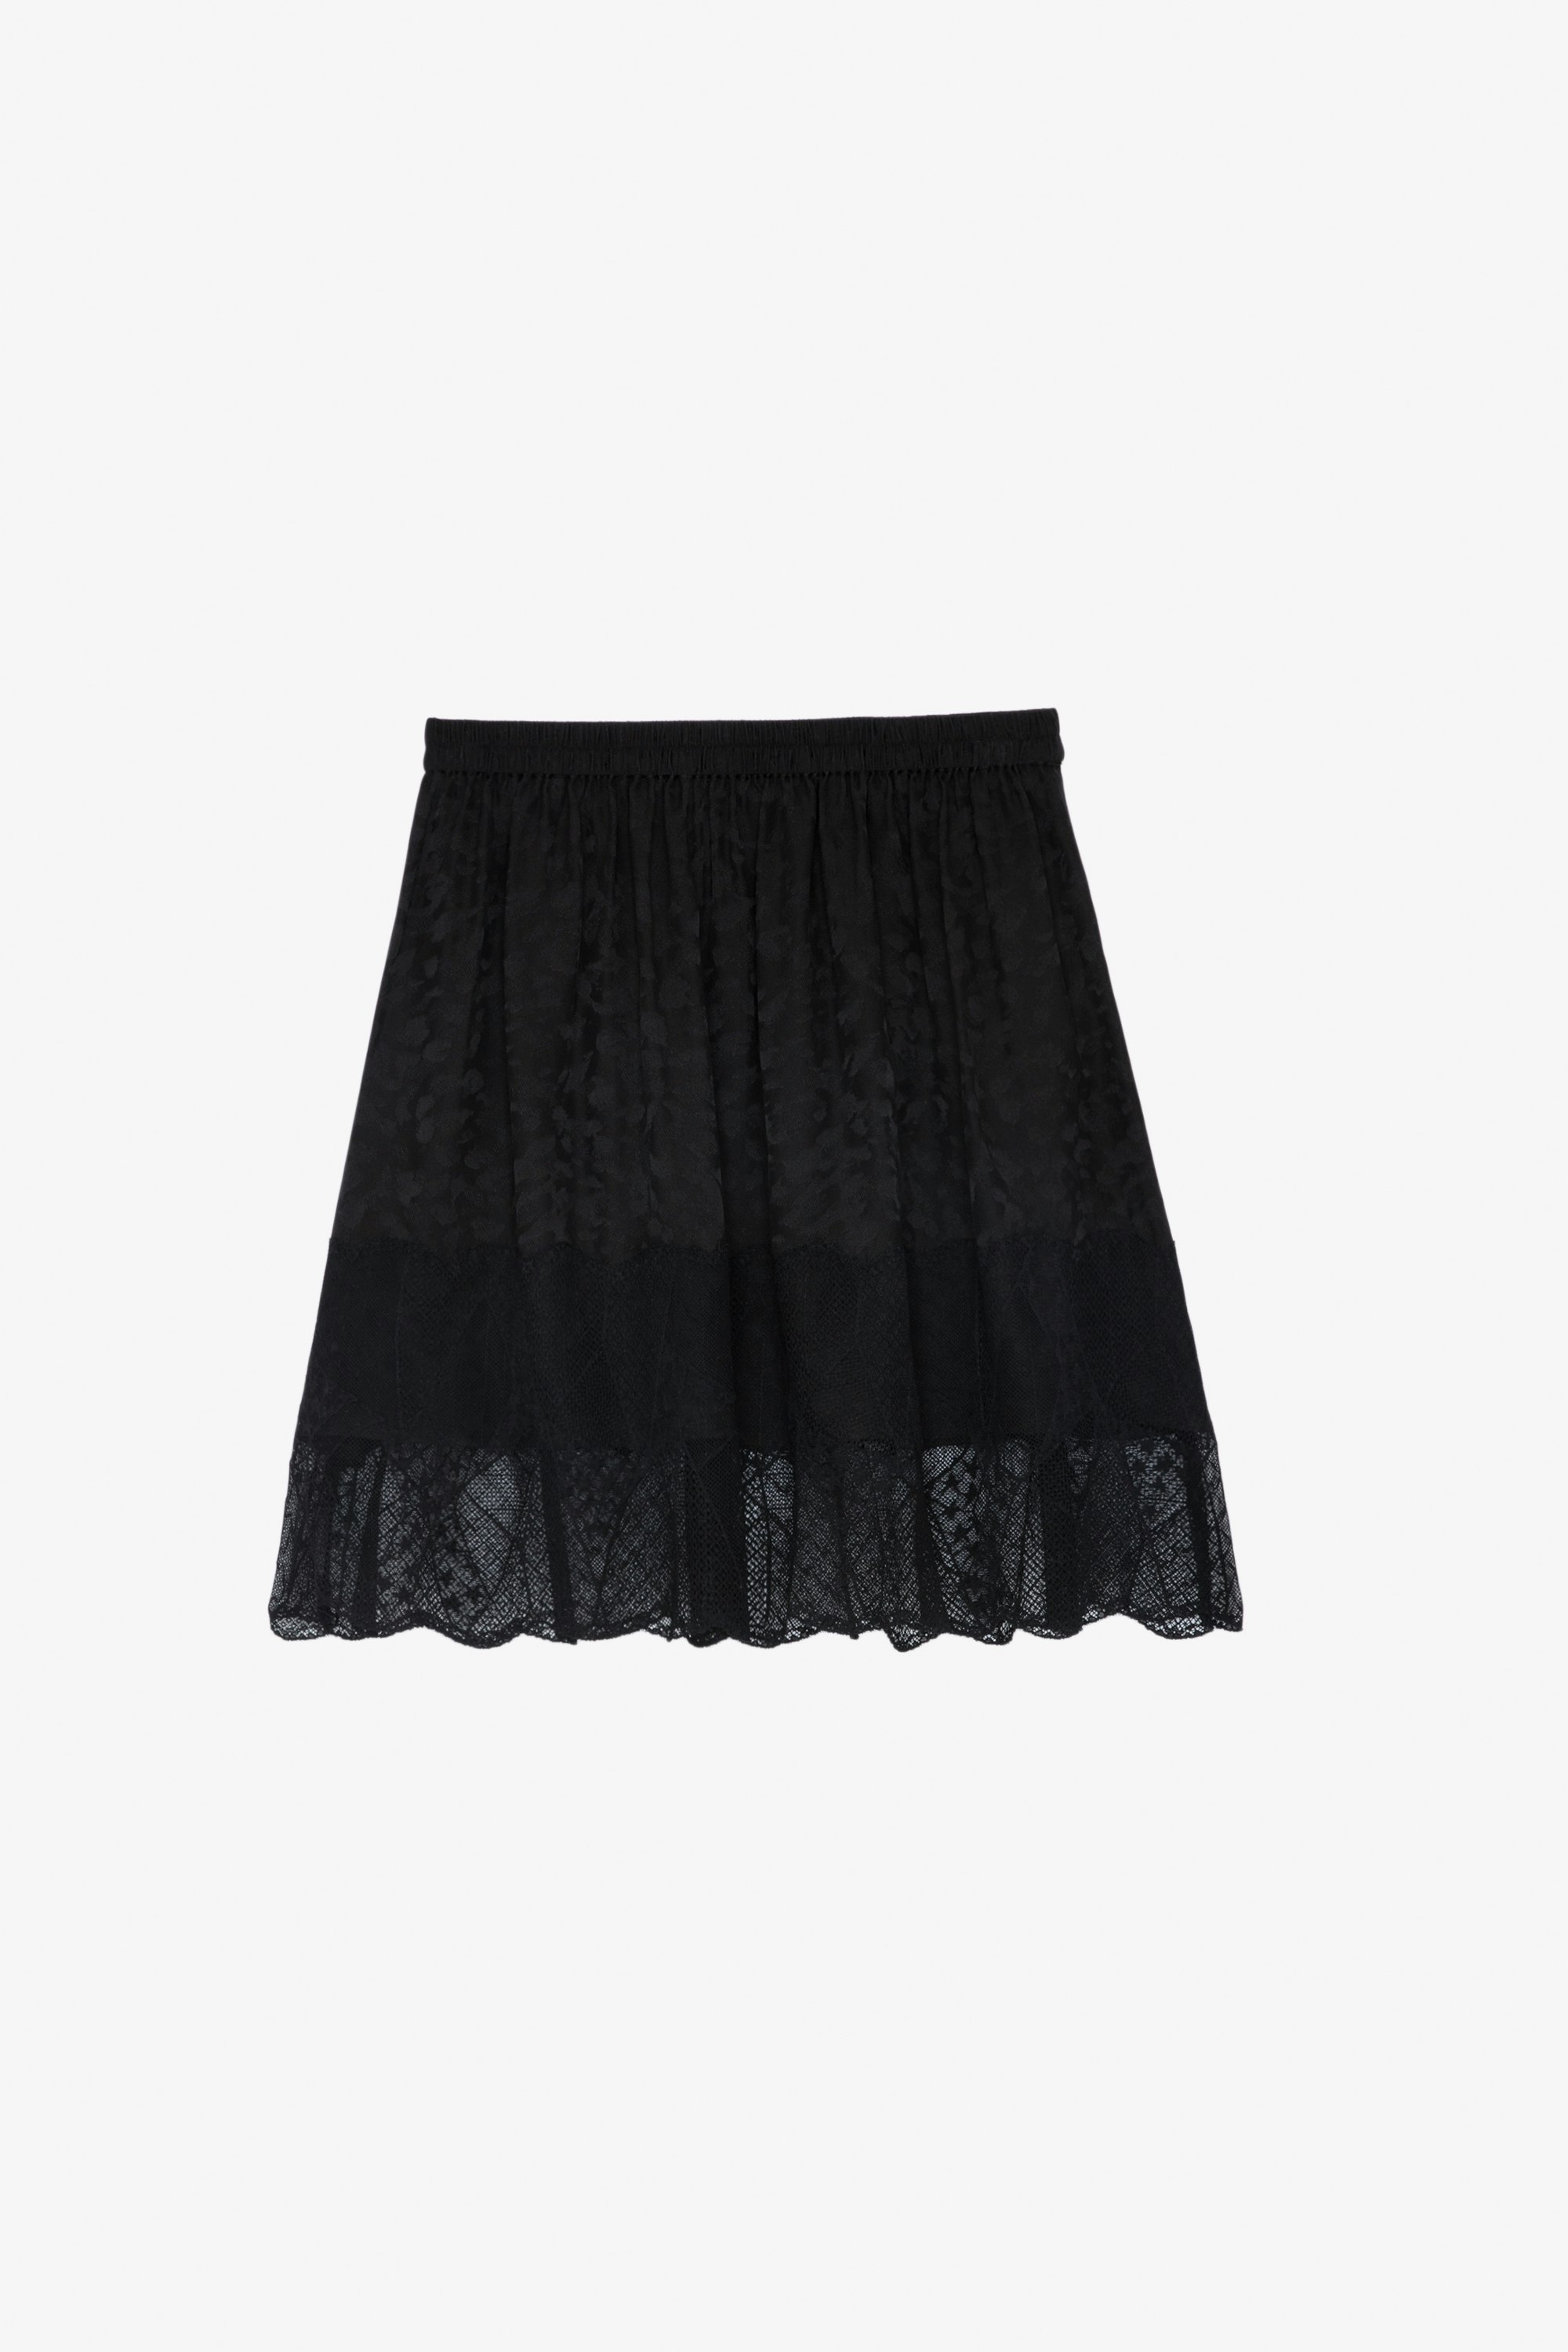 Jimy Silk Skirt Women's short skirt in black leopard silk jacquard with strips of lace